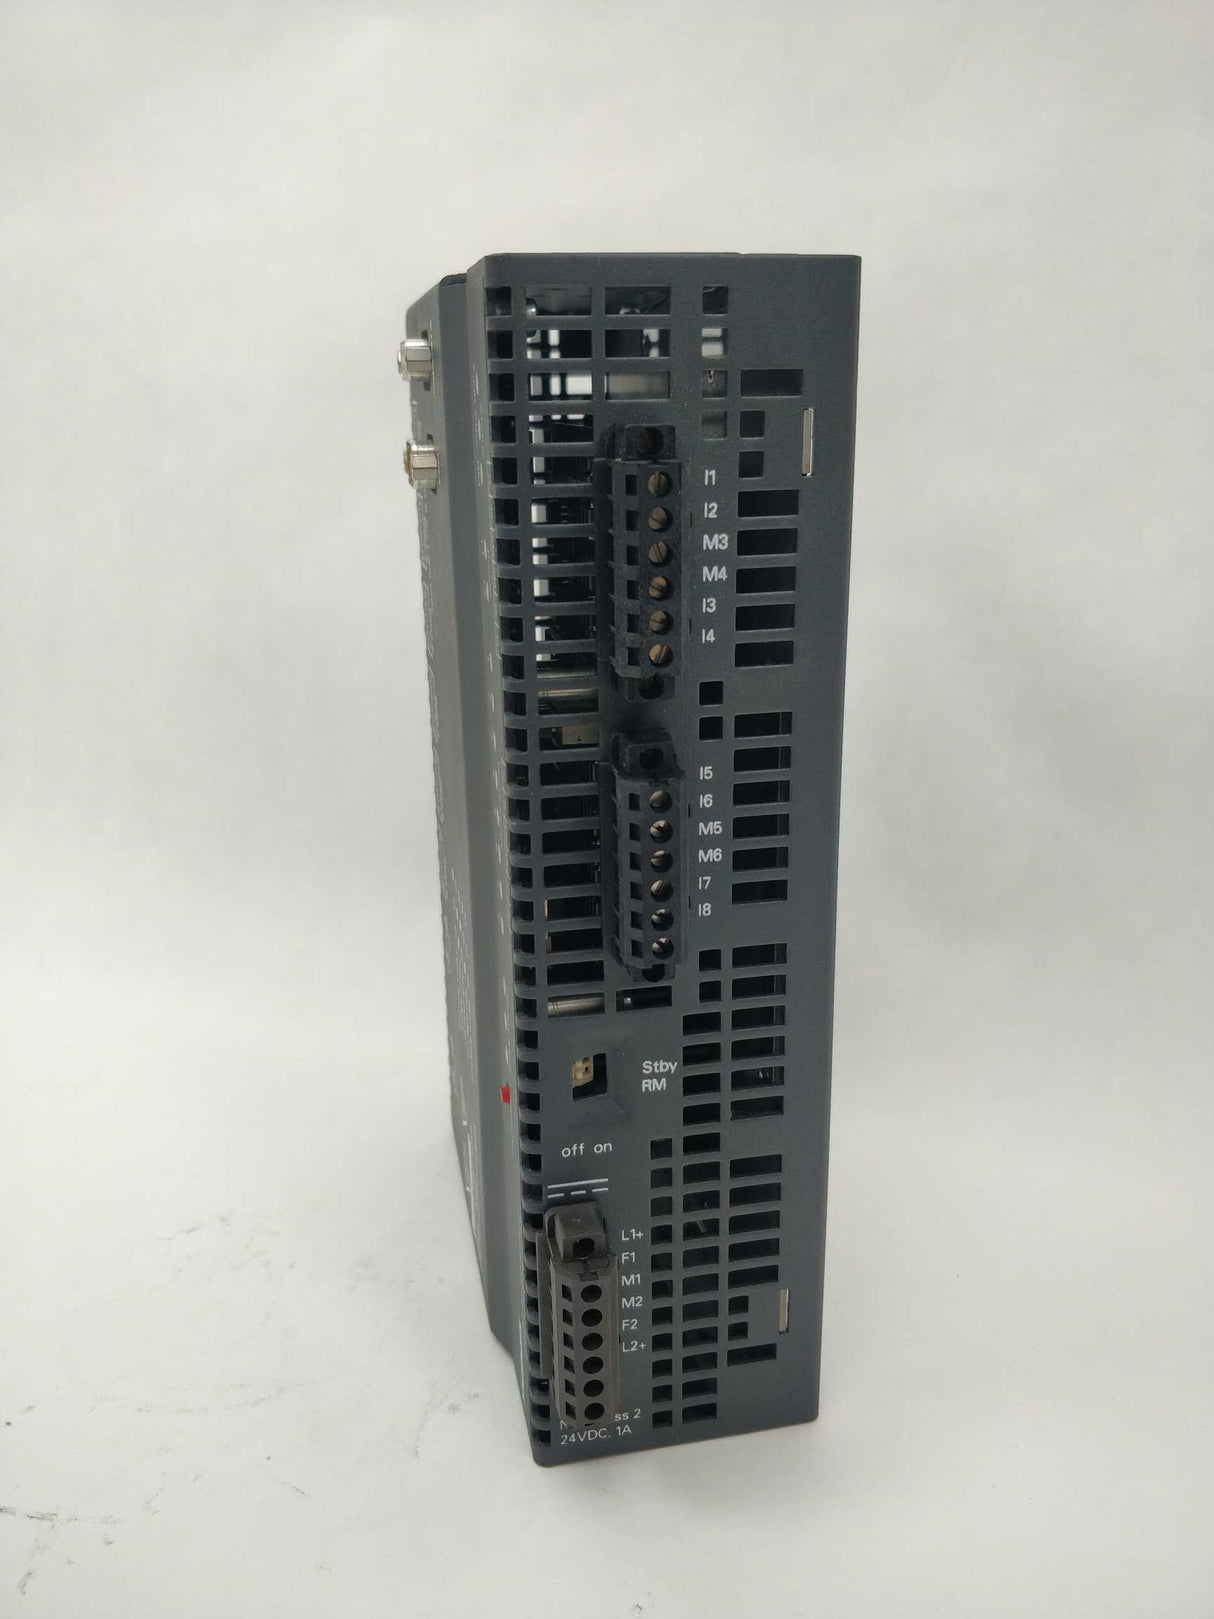 Siemens 6GK1105-2AB10 SIMATIC NET Industrial Ethernet